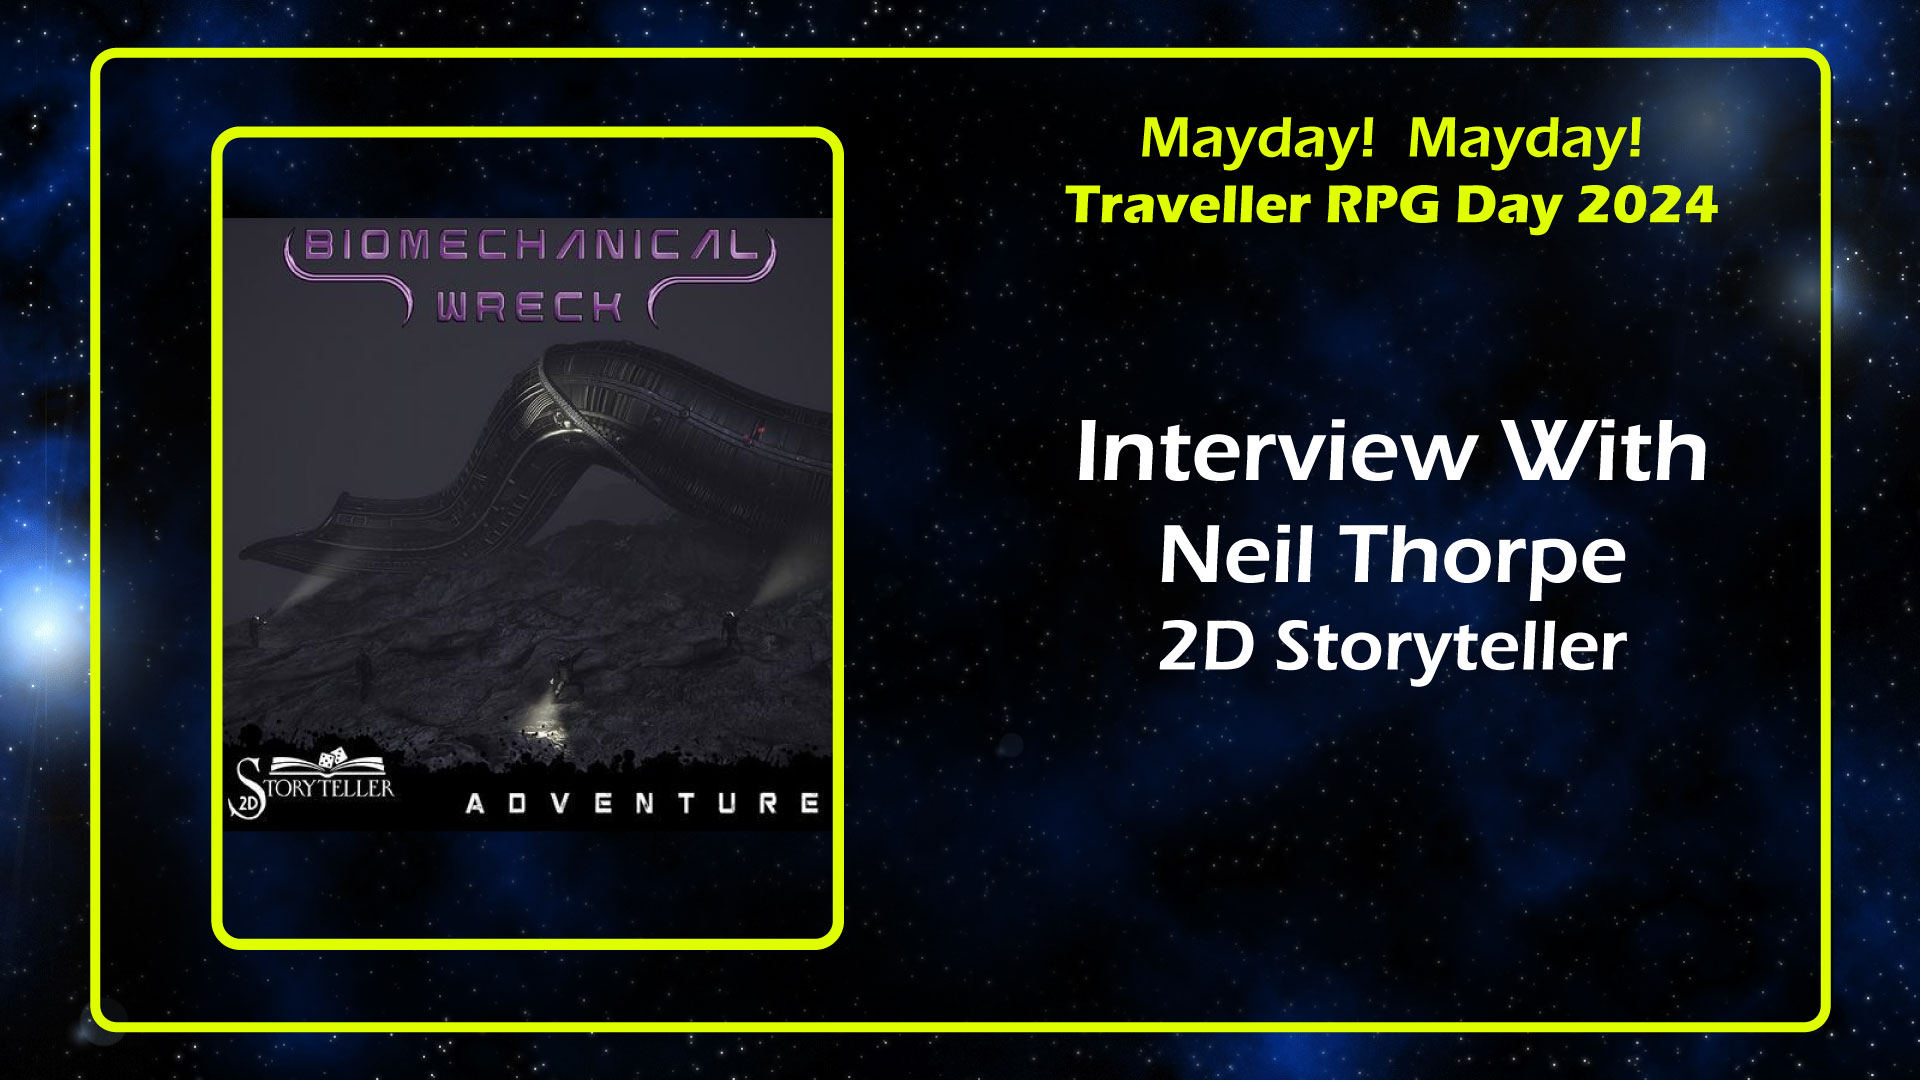 Neil Thorpe of 2D Storyteller Interview Traveller Mayday 2024